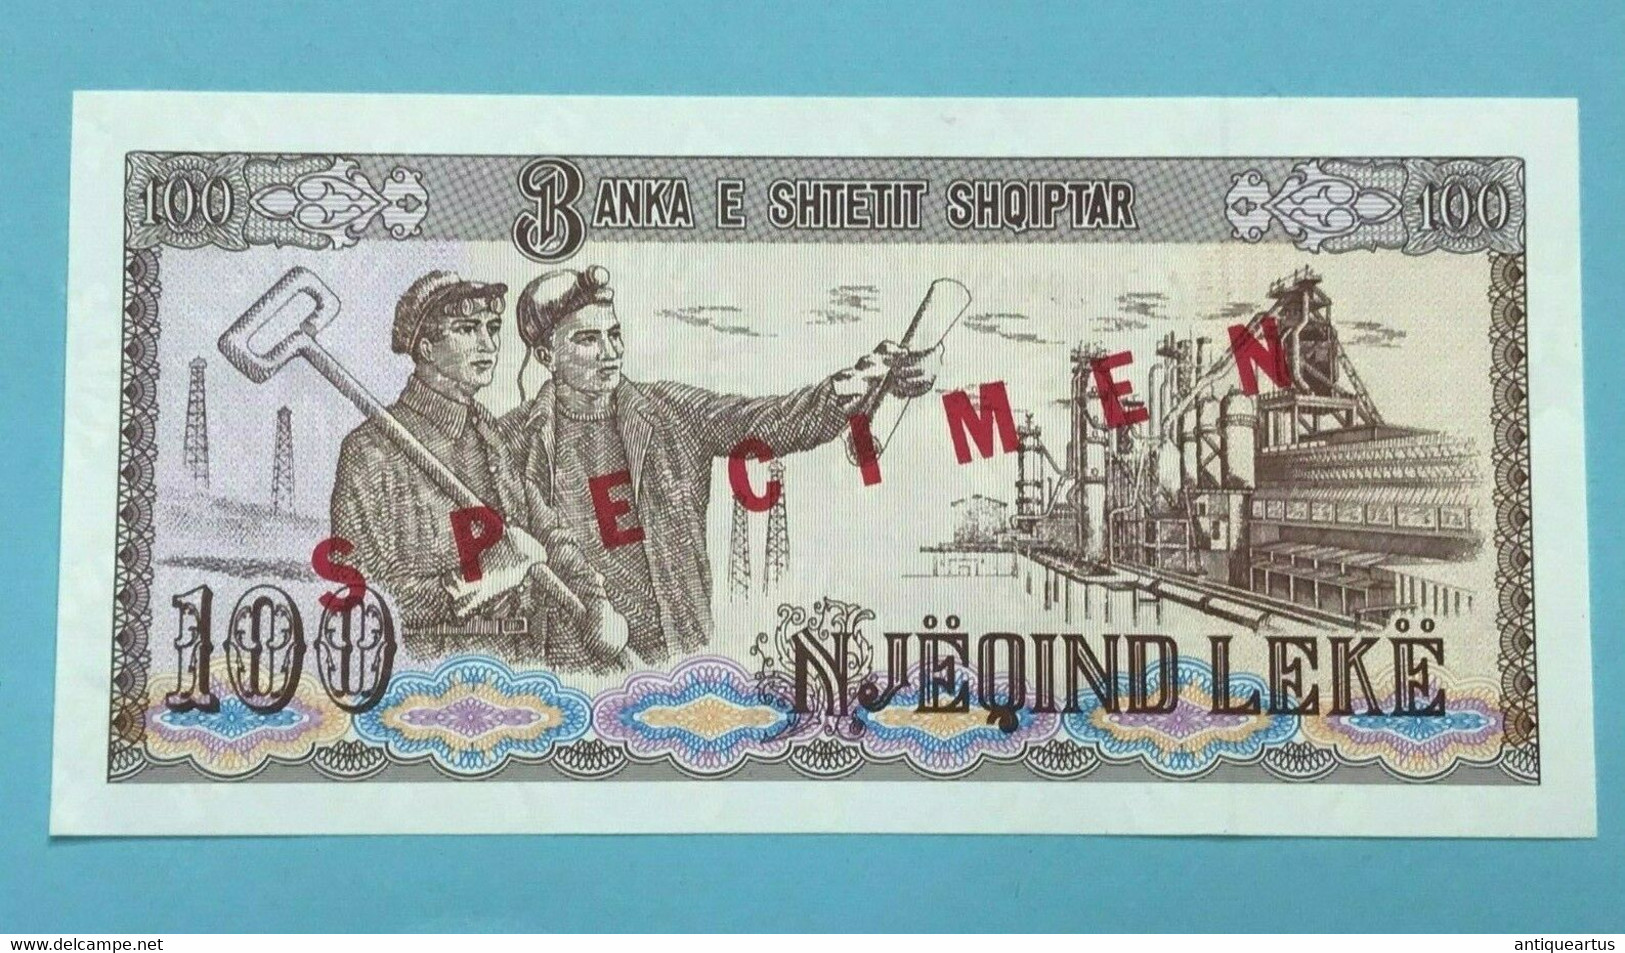 ALBANIA BANKNOTES SPECIMEN 100 ALBANIAN LEK PAPER MONEY 1991 UNC - Albania